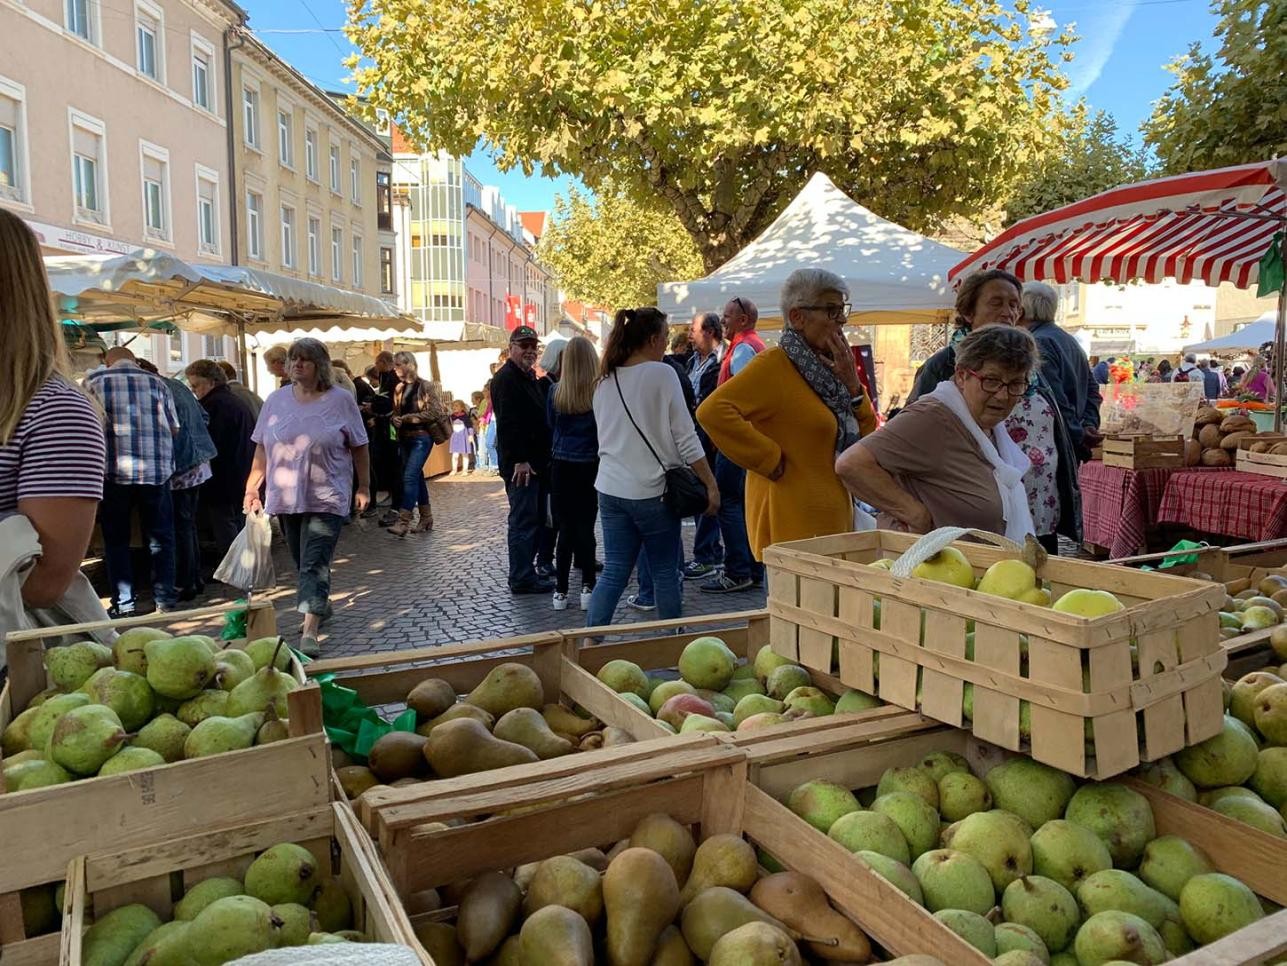 Apples at the farmers' market in Rastatt